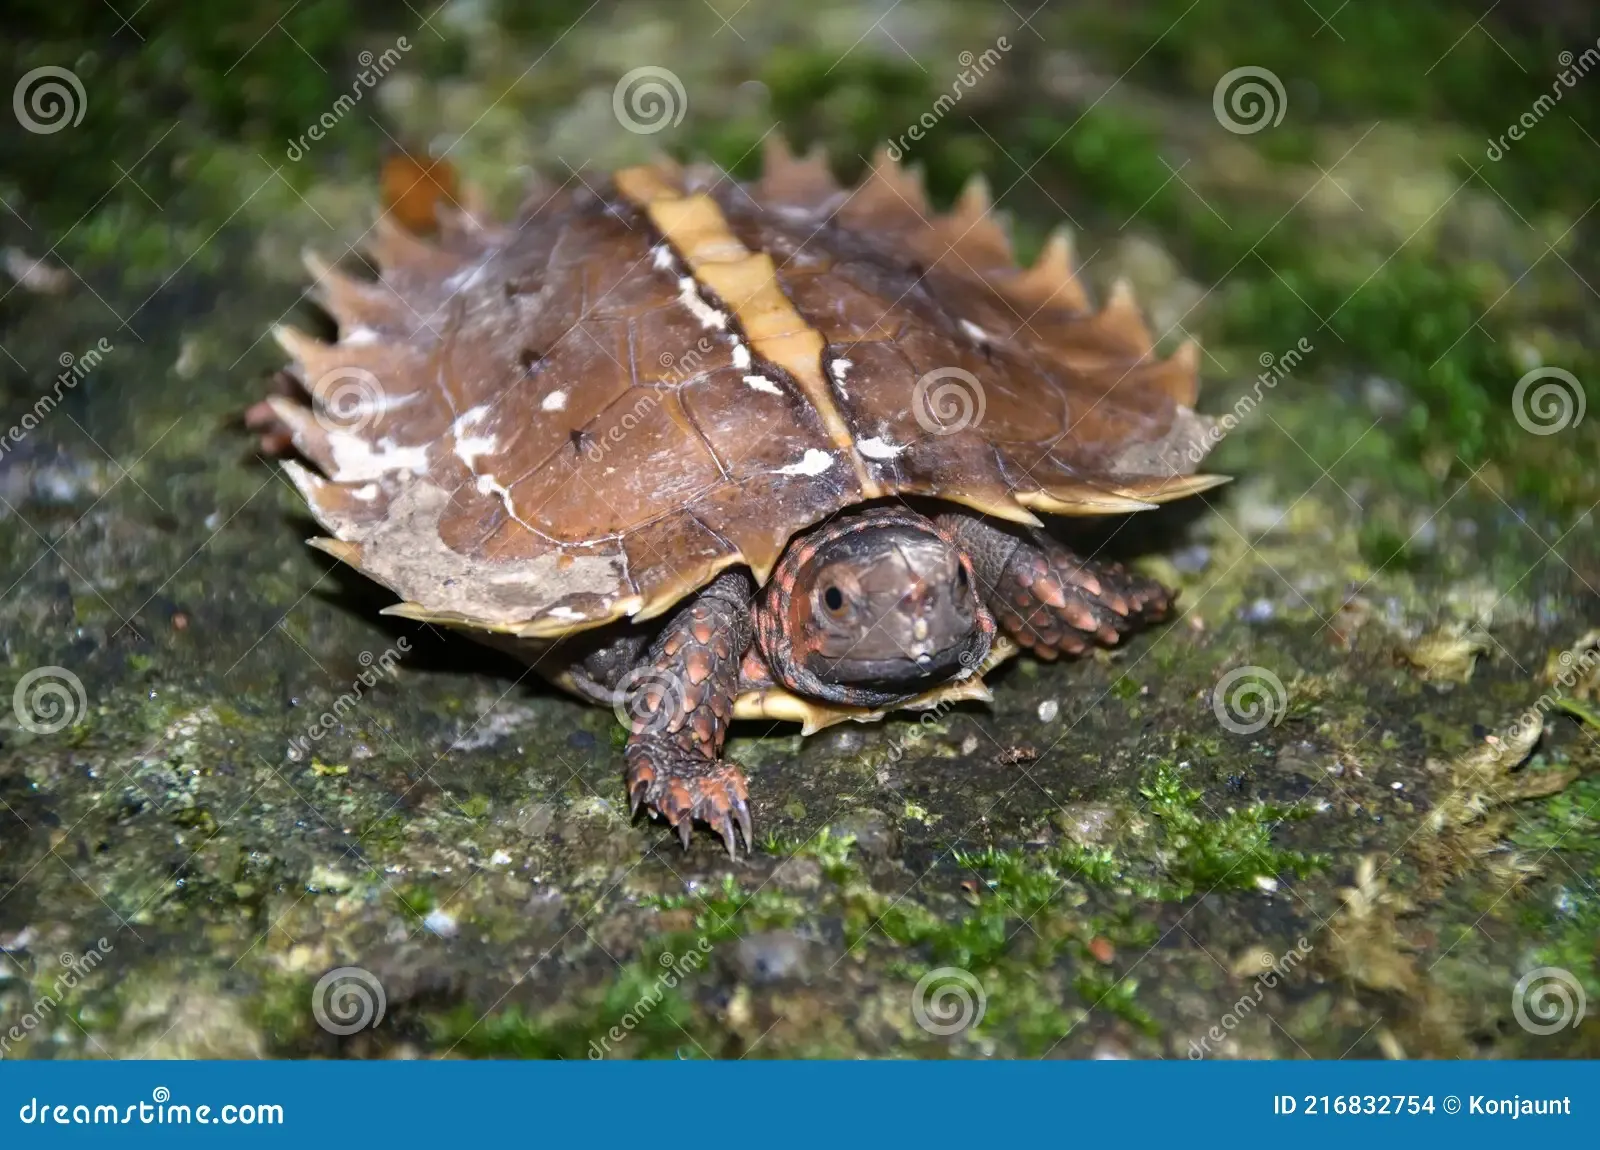 spiny-turtle-heosemys-spinosa-rock-green-moss-terrapin-cogwheel-wildness-forrest-rain-thailand-216832754.jpg